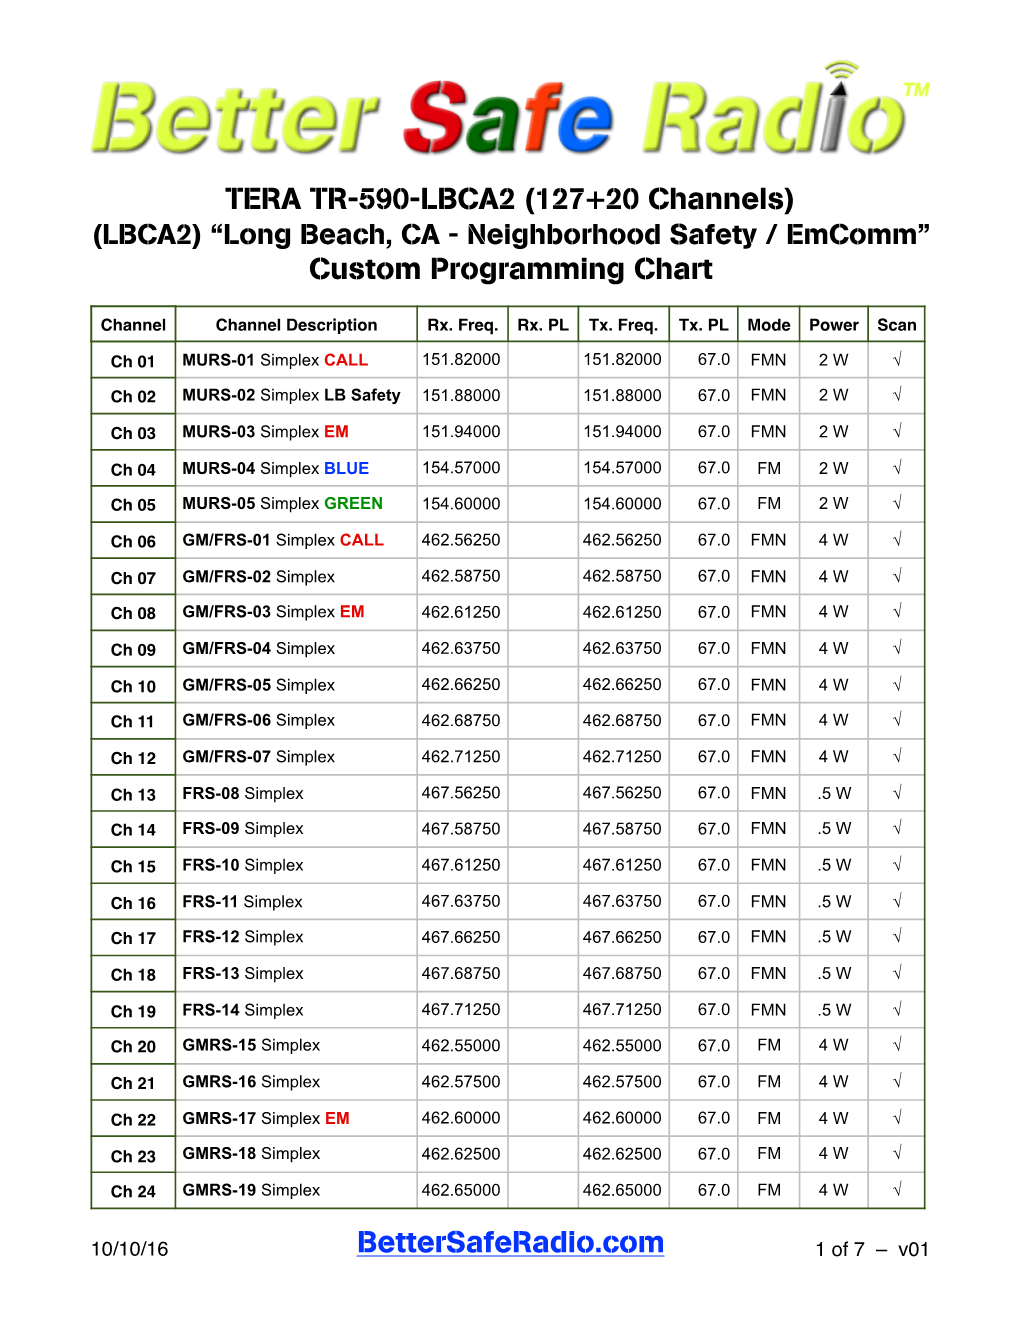 TERA TR-590-LBCA2 (127+20 Channels) (LBCA2) “Long Beach, CA - Neighborhood Safety / Emcomm” Custom Programming Chart